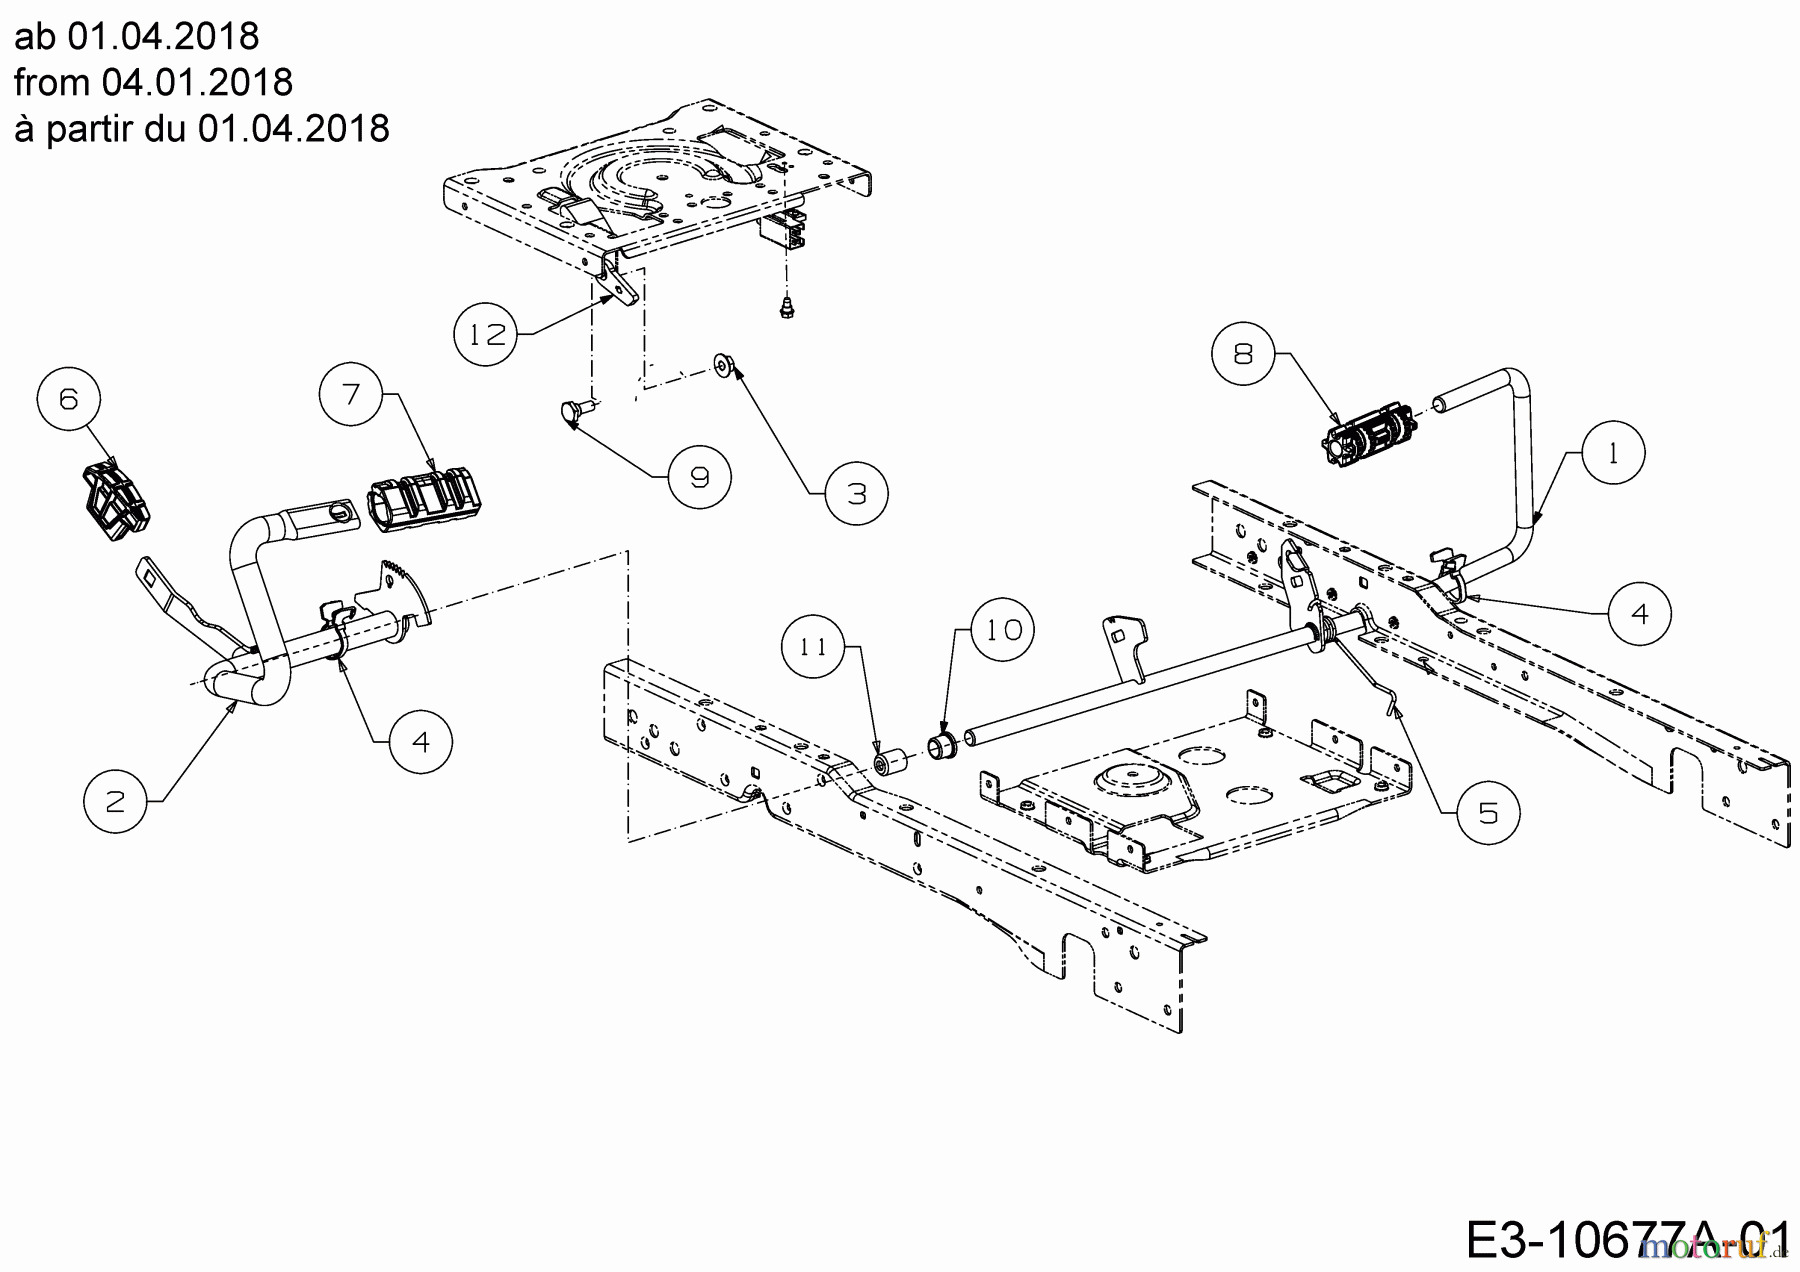  Tigara Lawn tractors TG 222/117 HBI 13BAA1KT649  (2020) Pedals from 04.01.2018